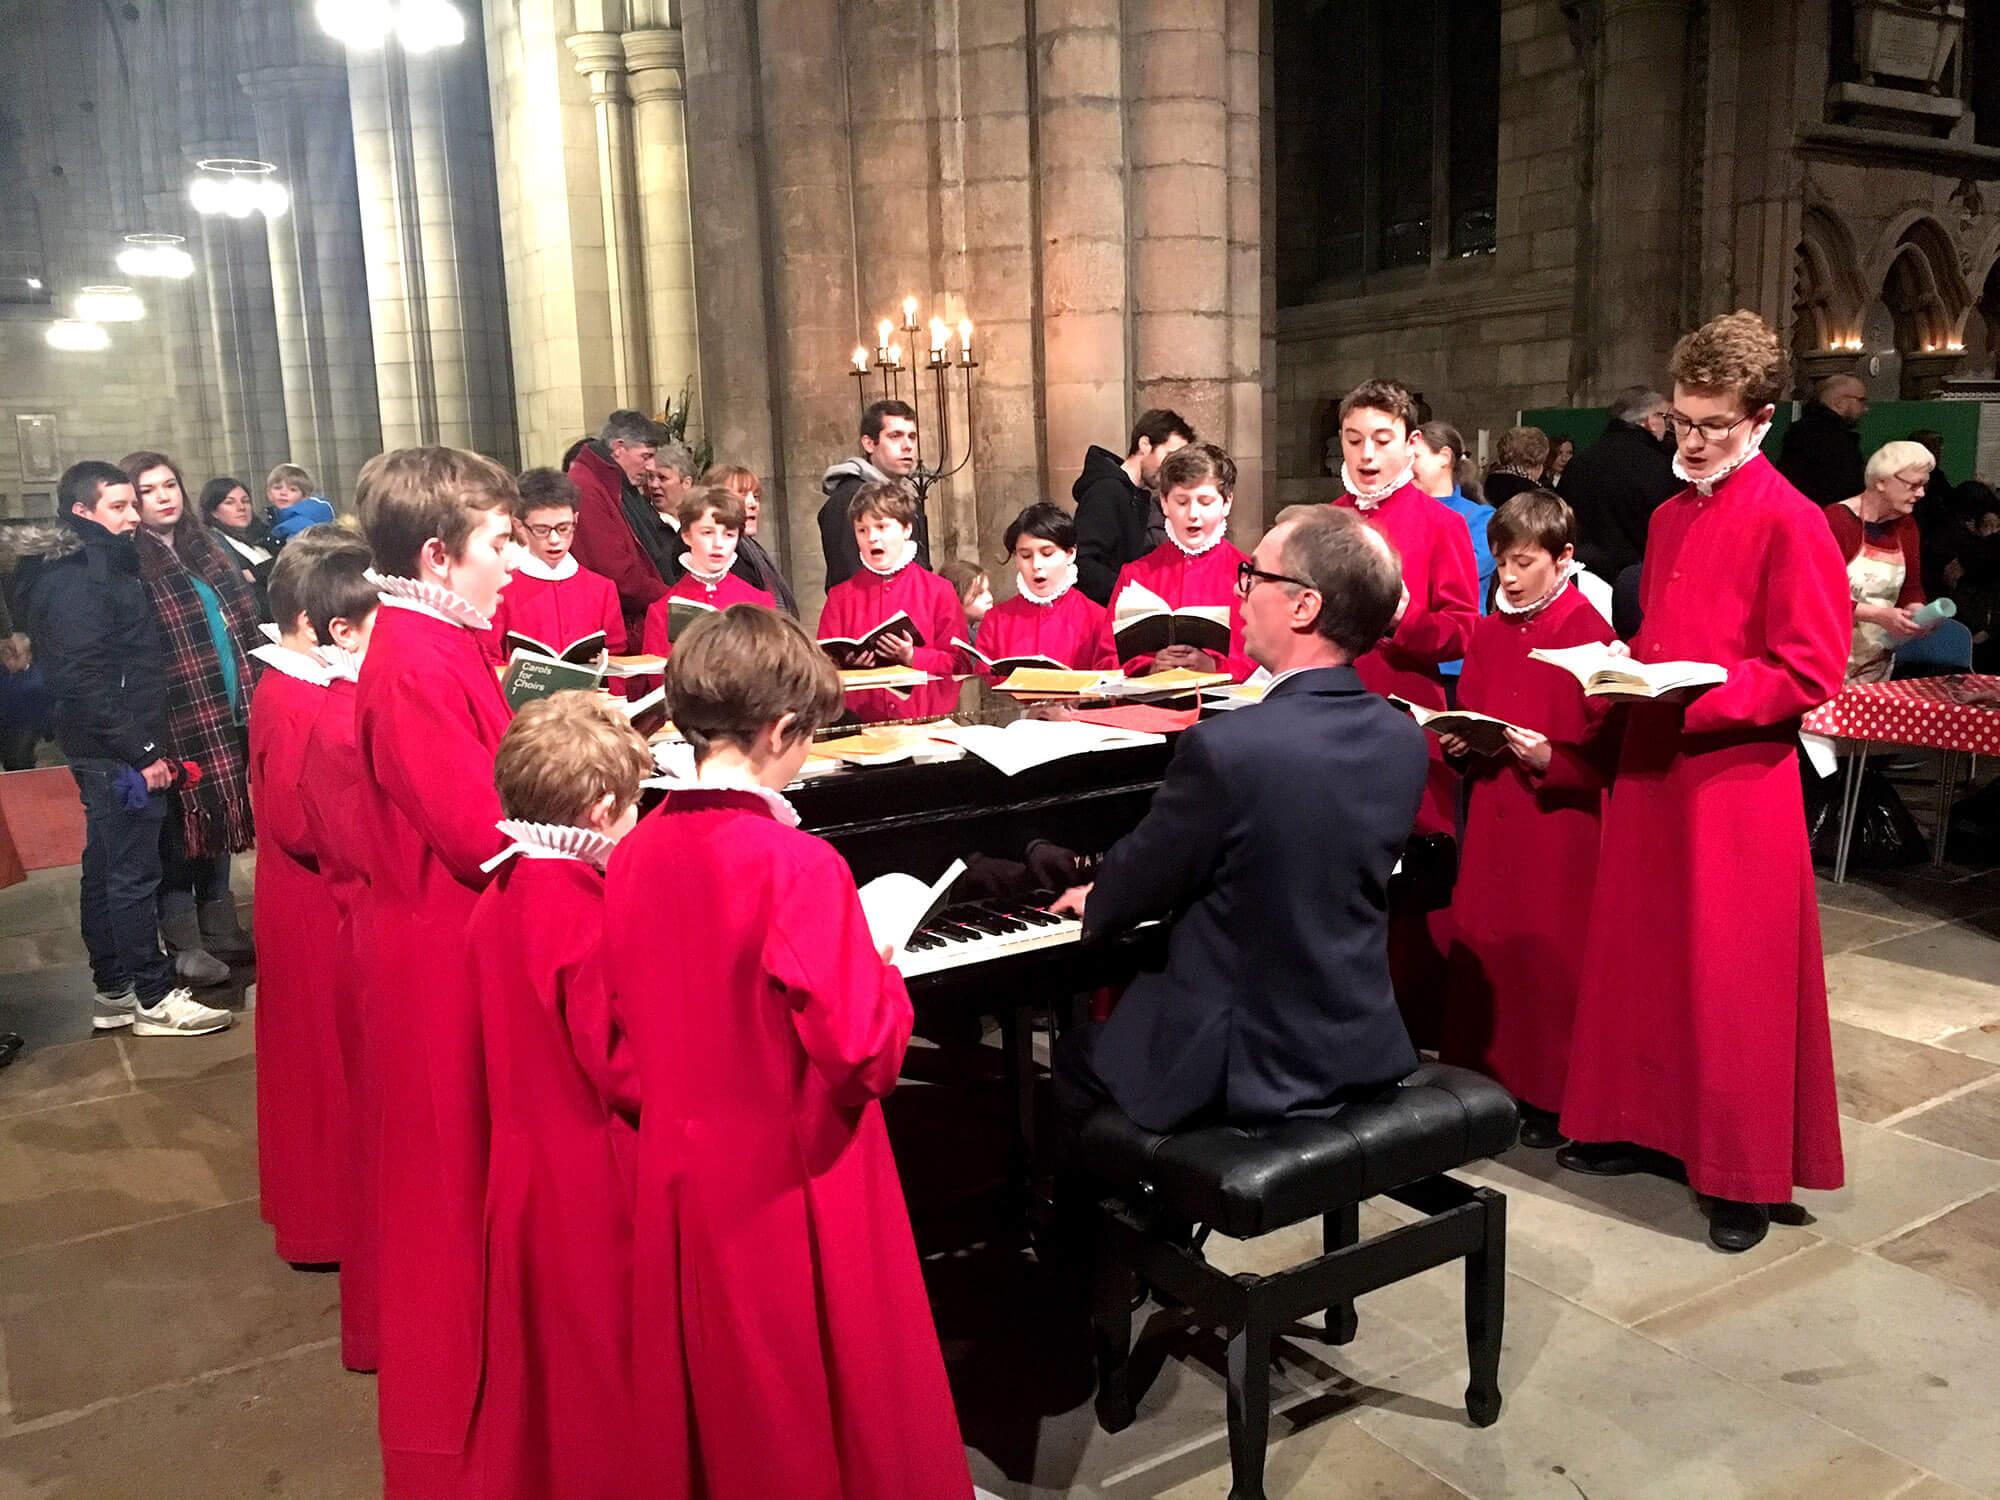 Hexham Abbey Choristers carol singing